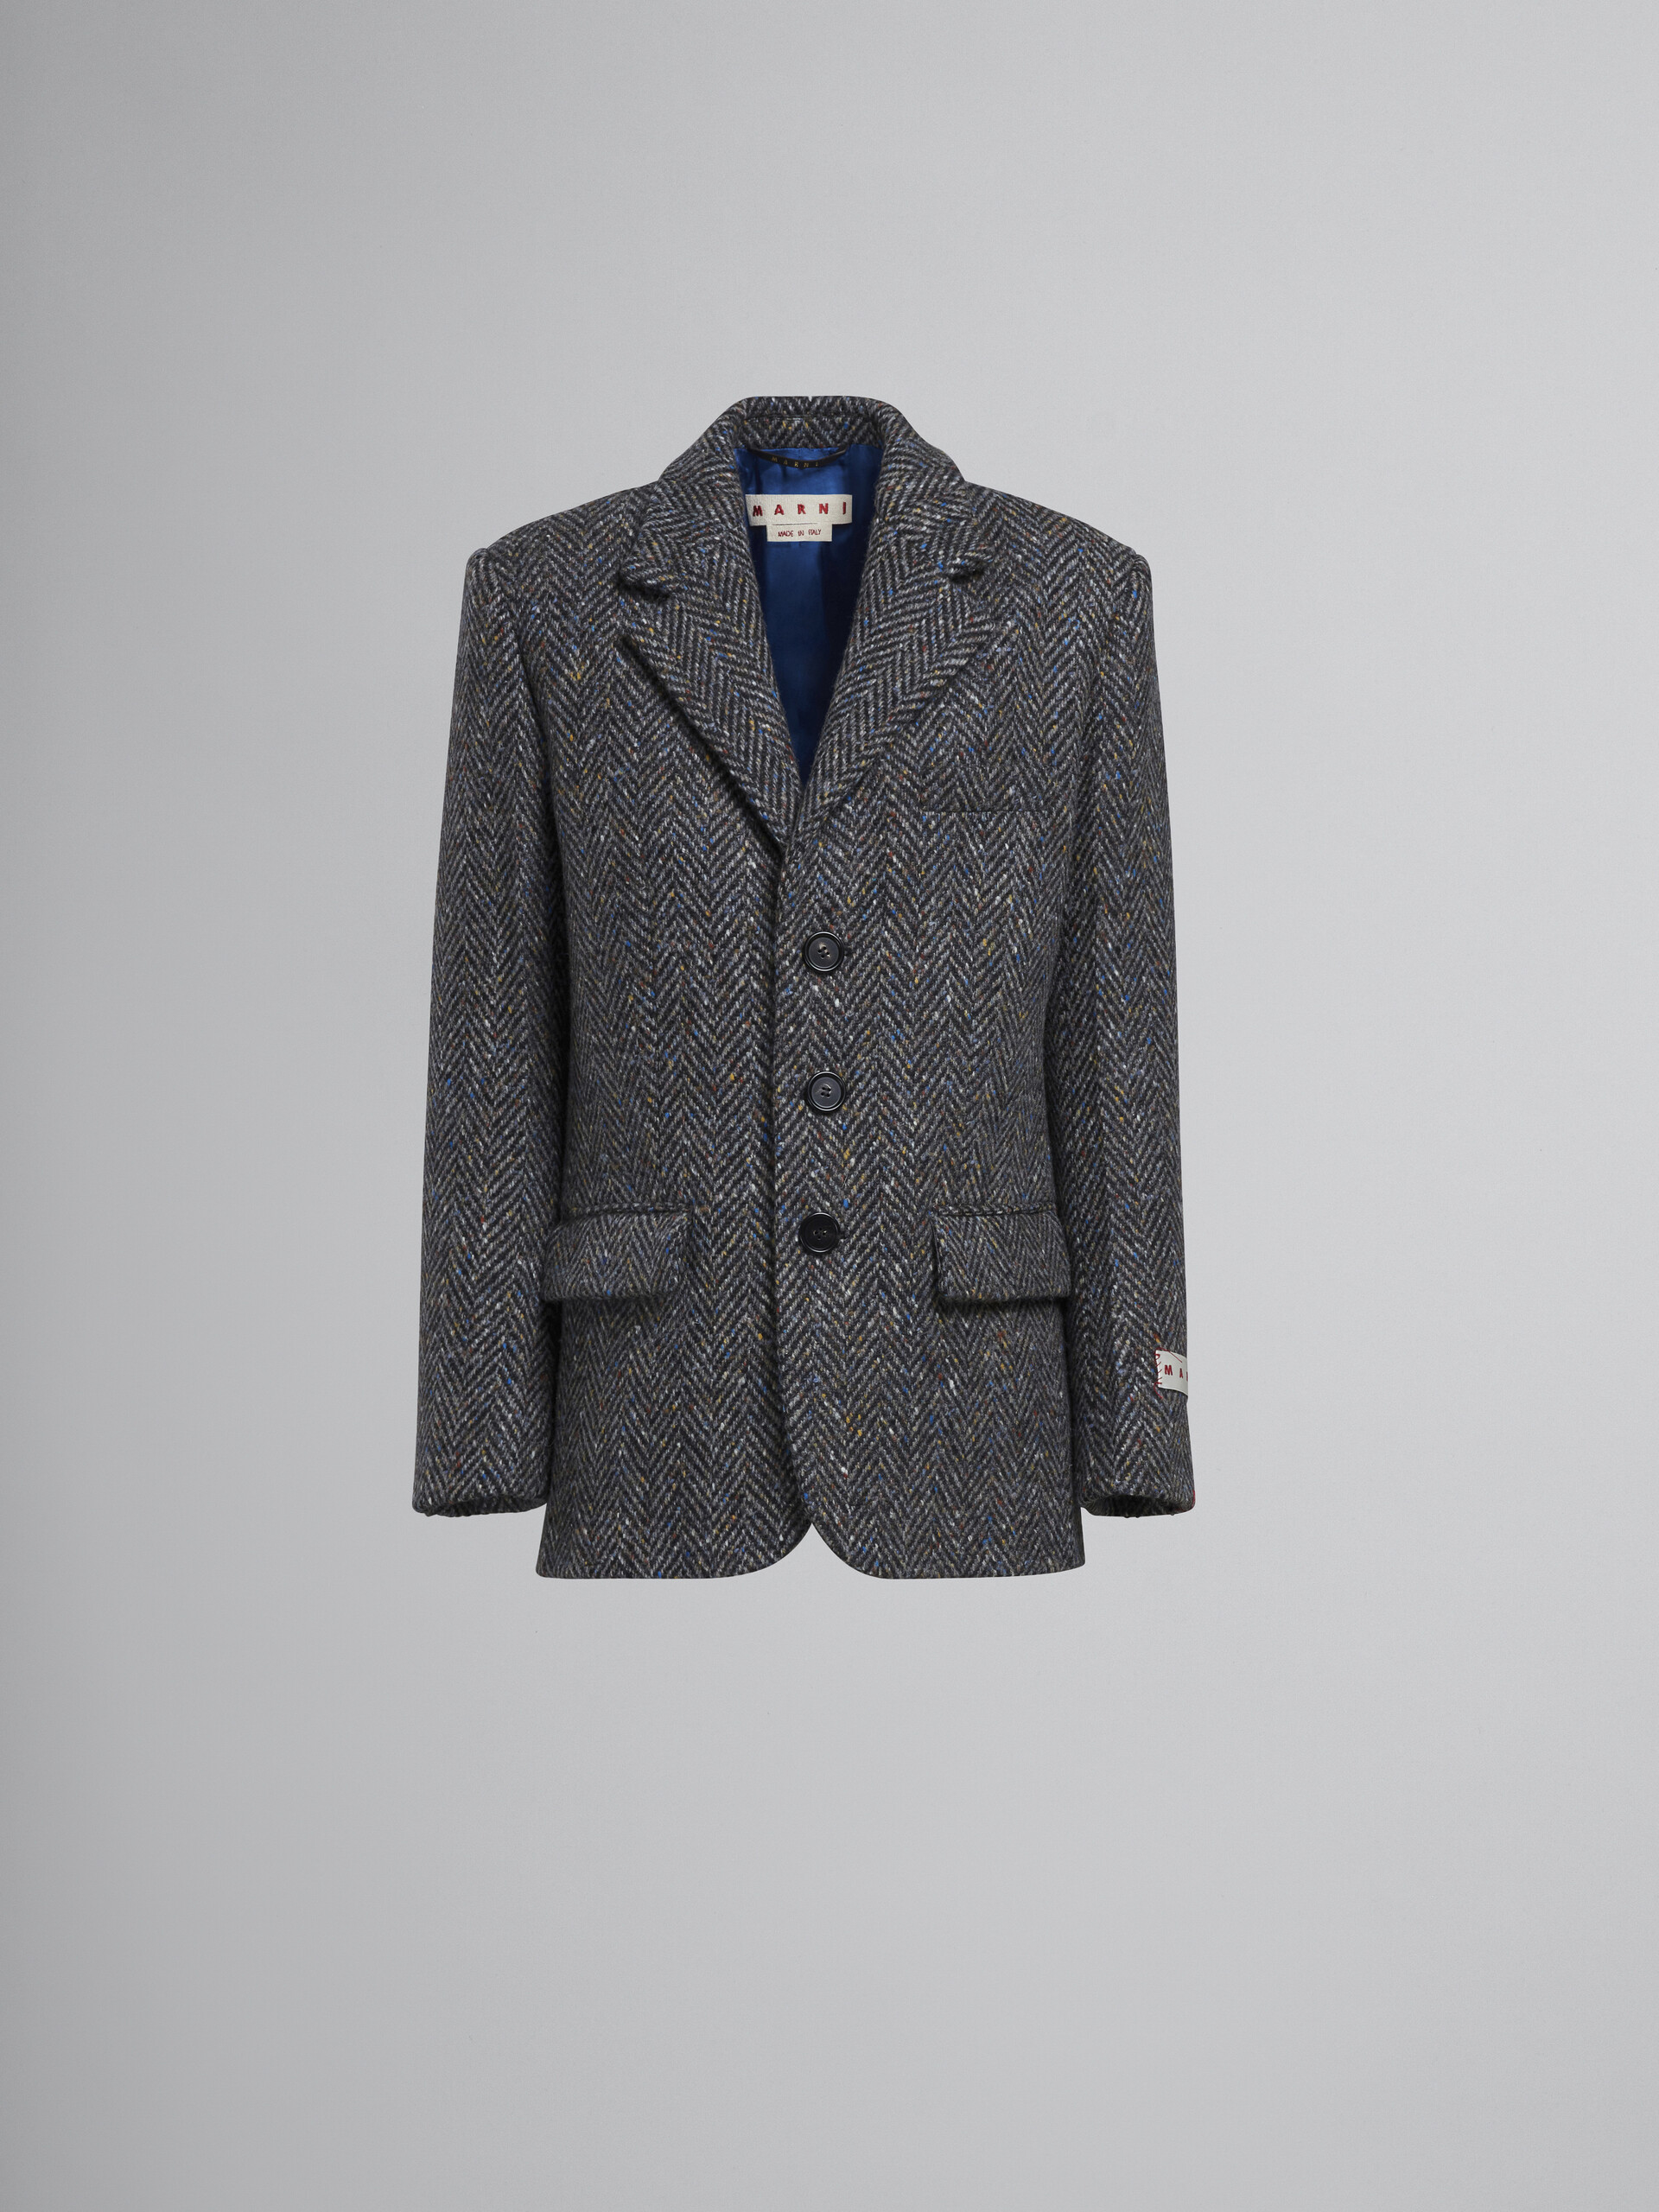 Grey chevron wool three-button blazer - Jackets - Image 1